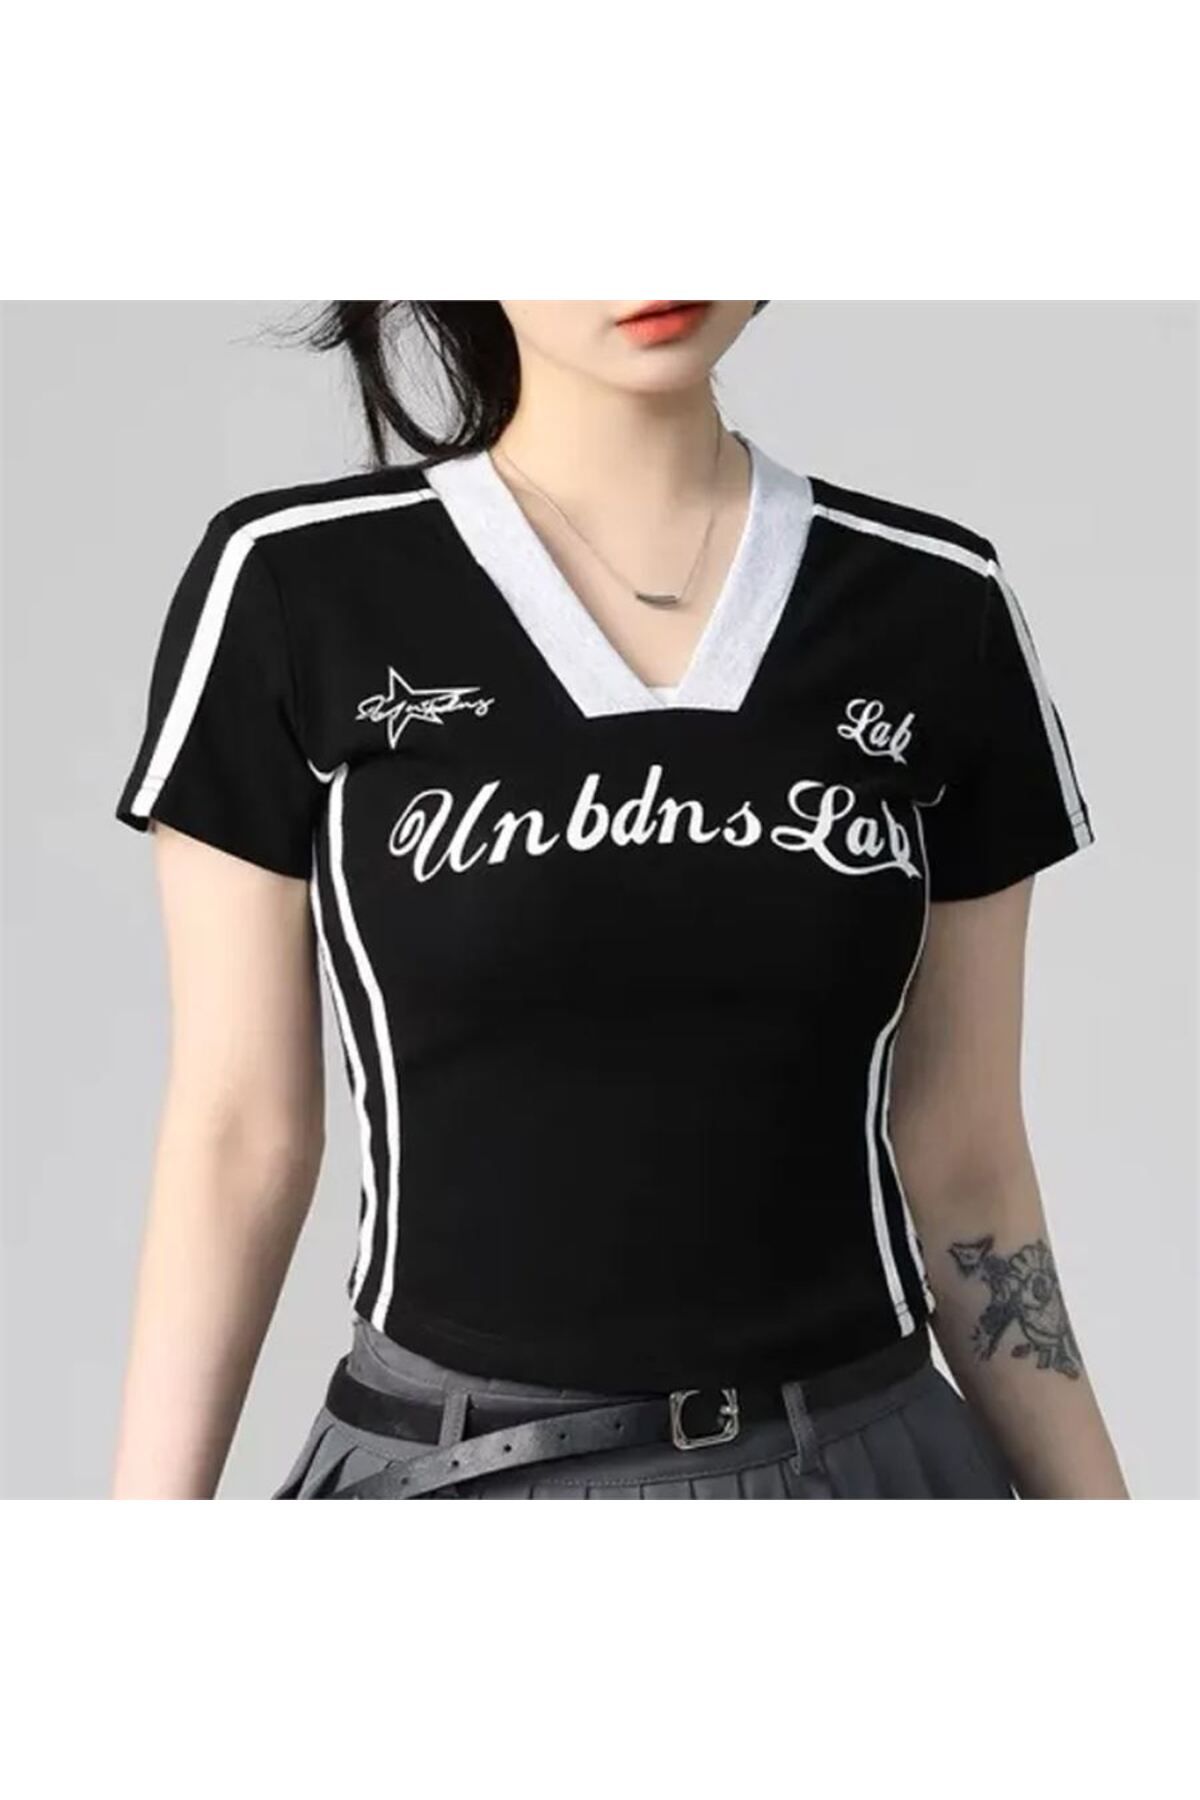 Gofeel Black Unbdns Lab Uniform Half T-Shirt - Trendyol